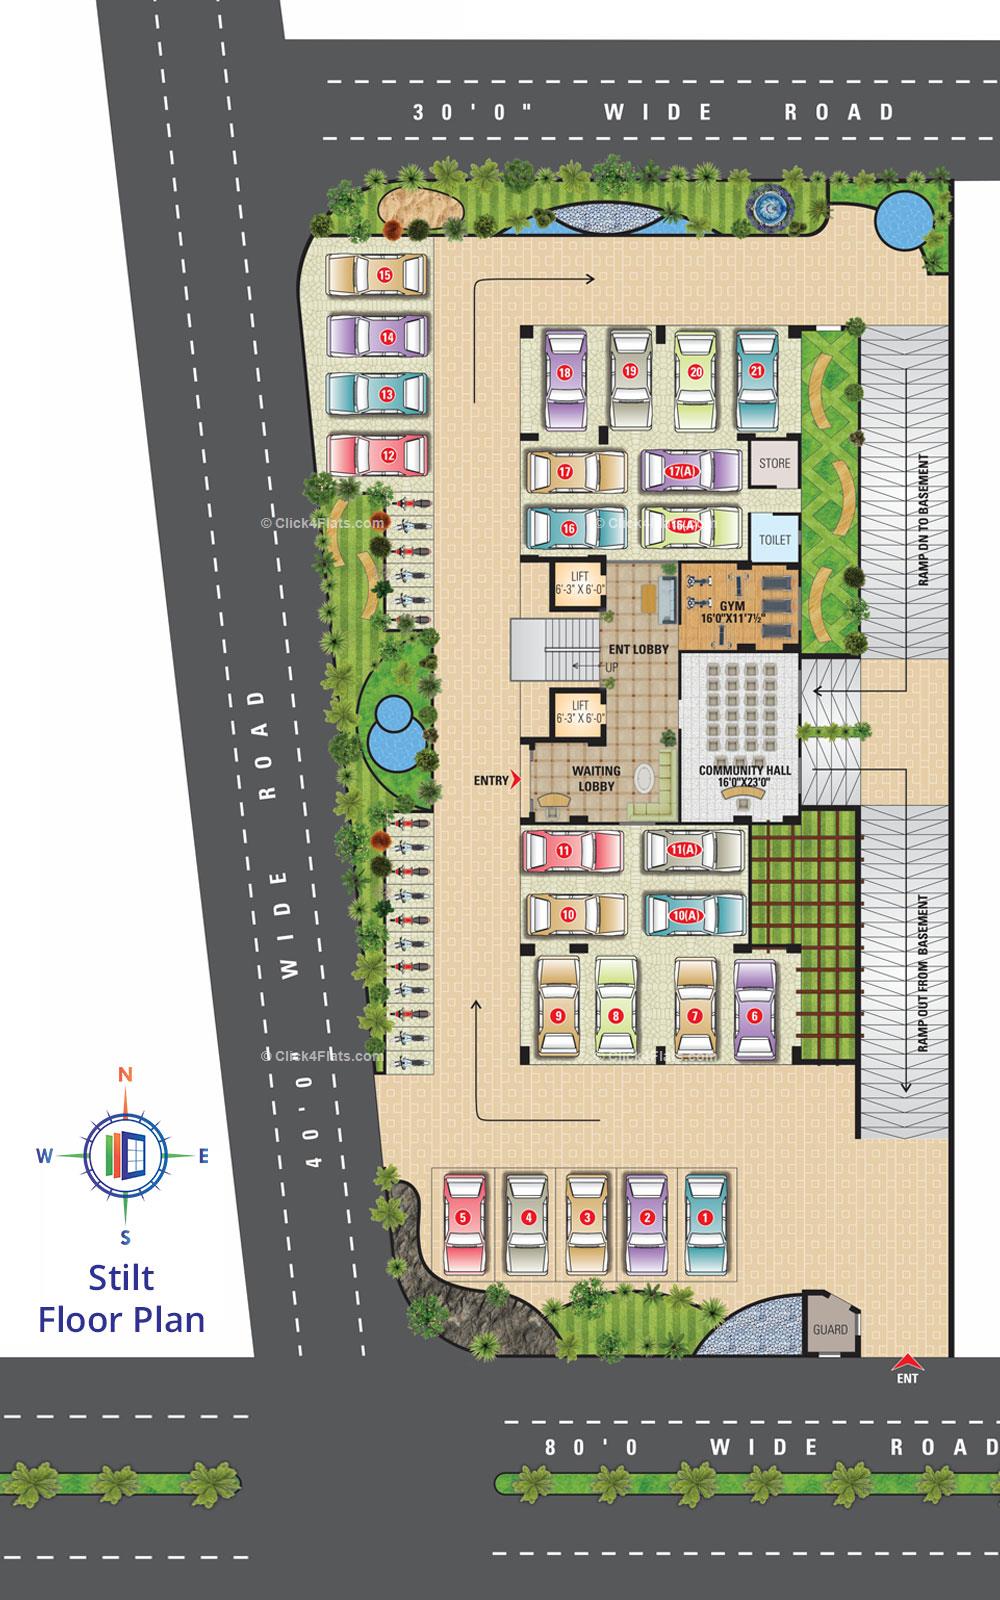 SDC Aishwarya Heights Stilt Floor Plan